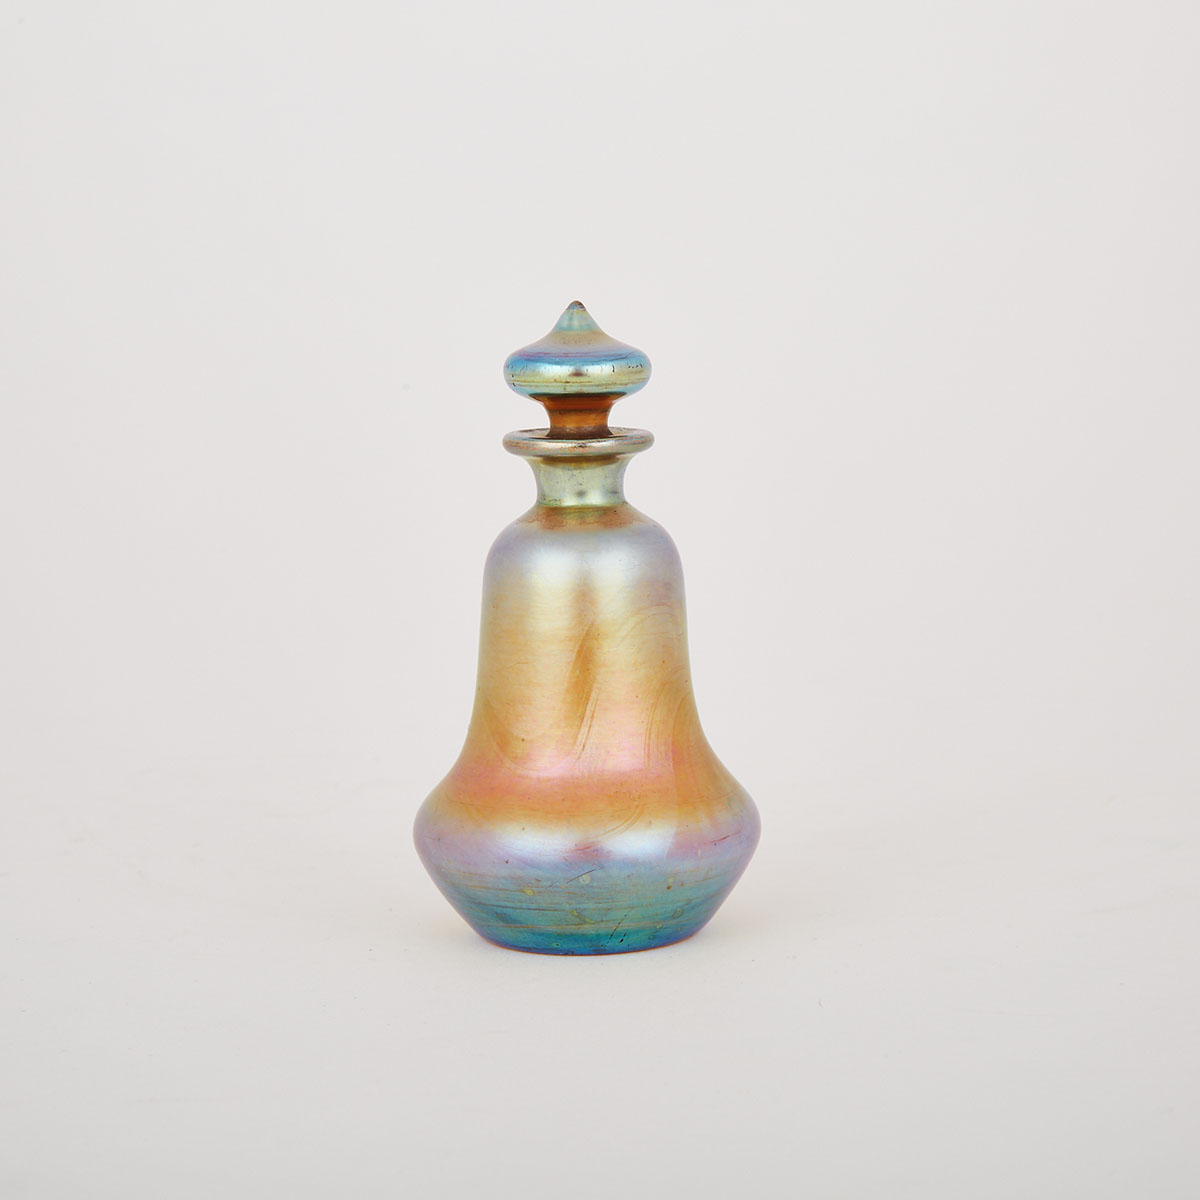 Steuben ‘Aurene’ Iridescent Glass Perfume Bottle, early 20th century